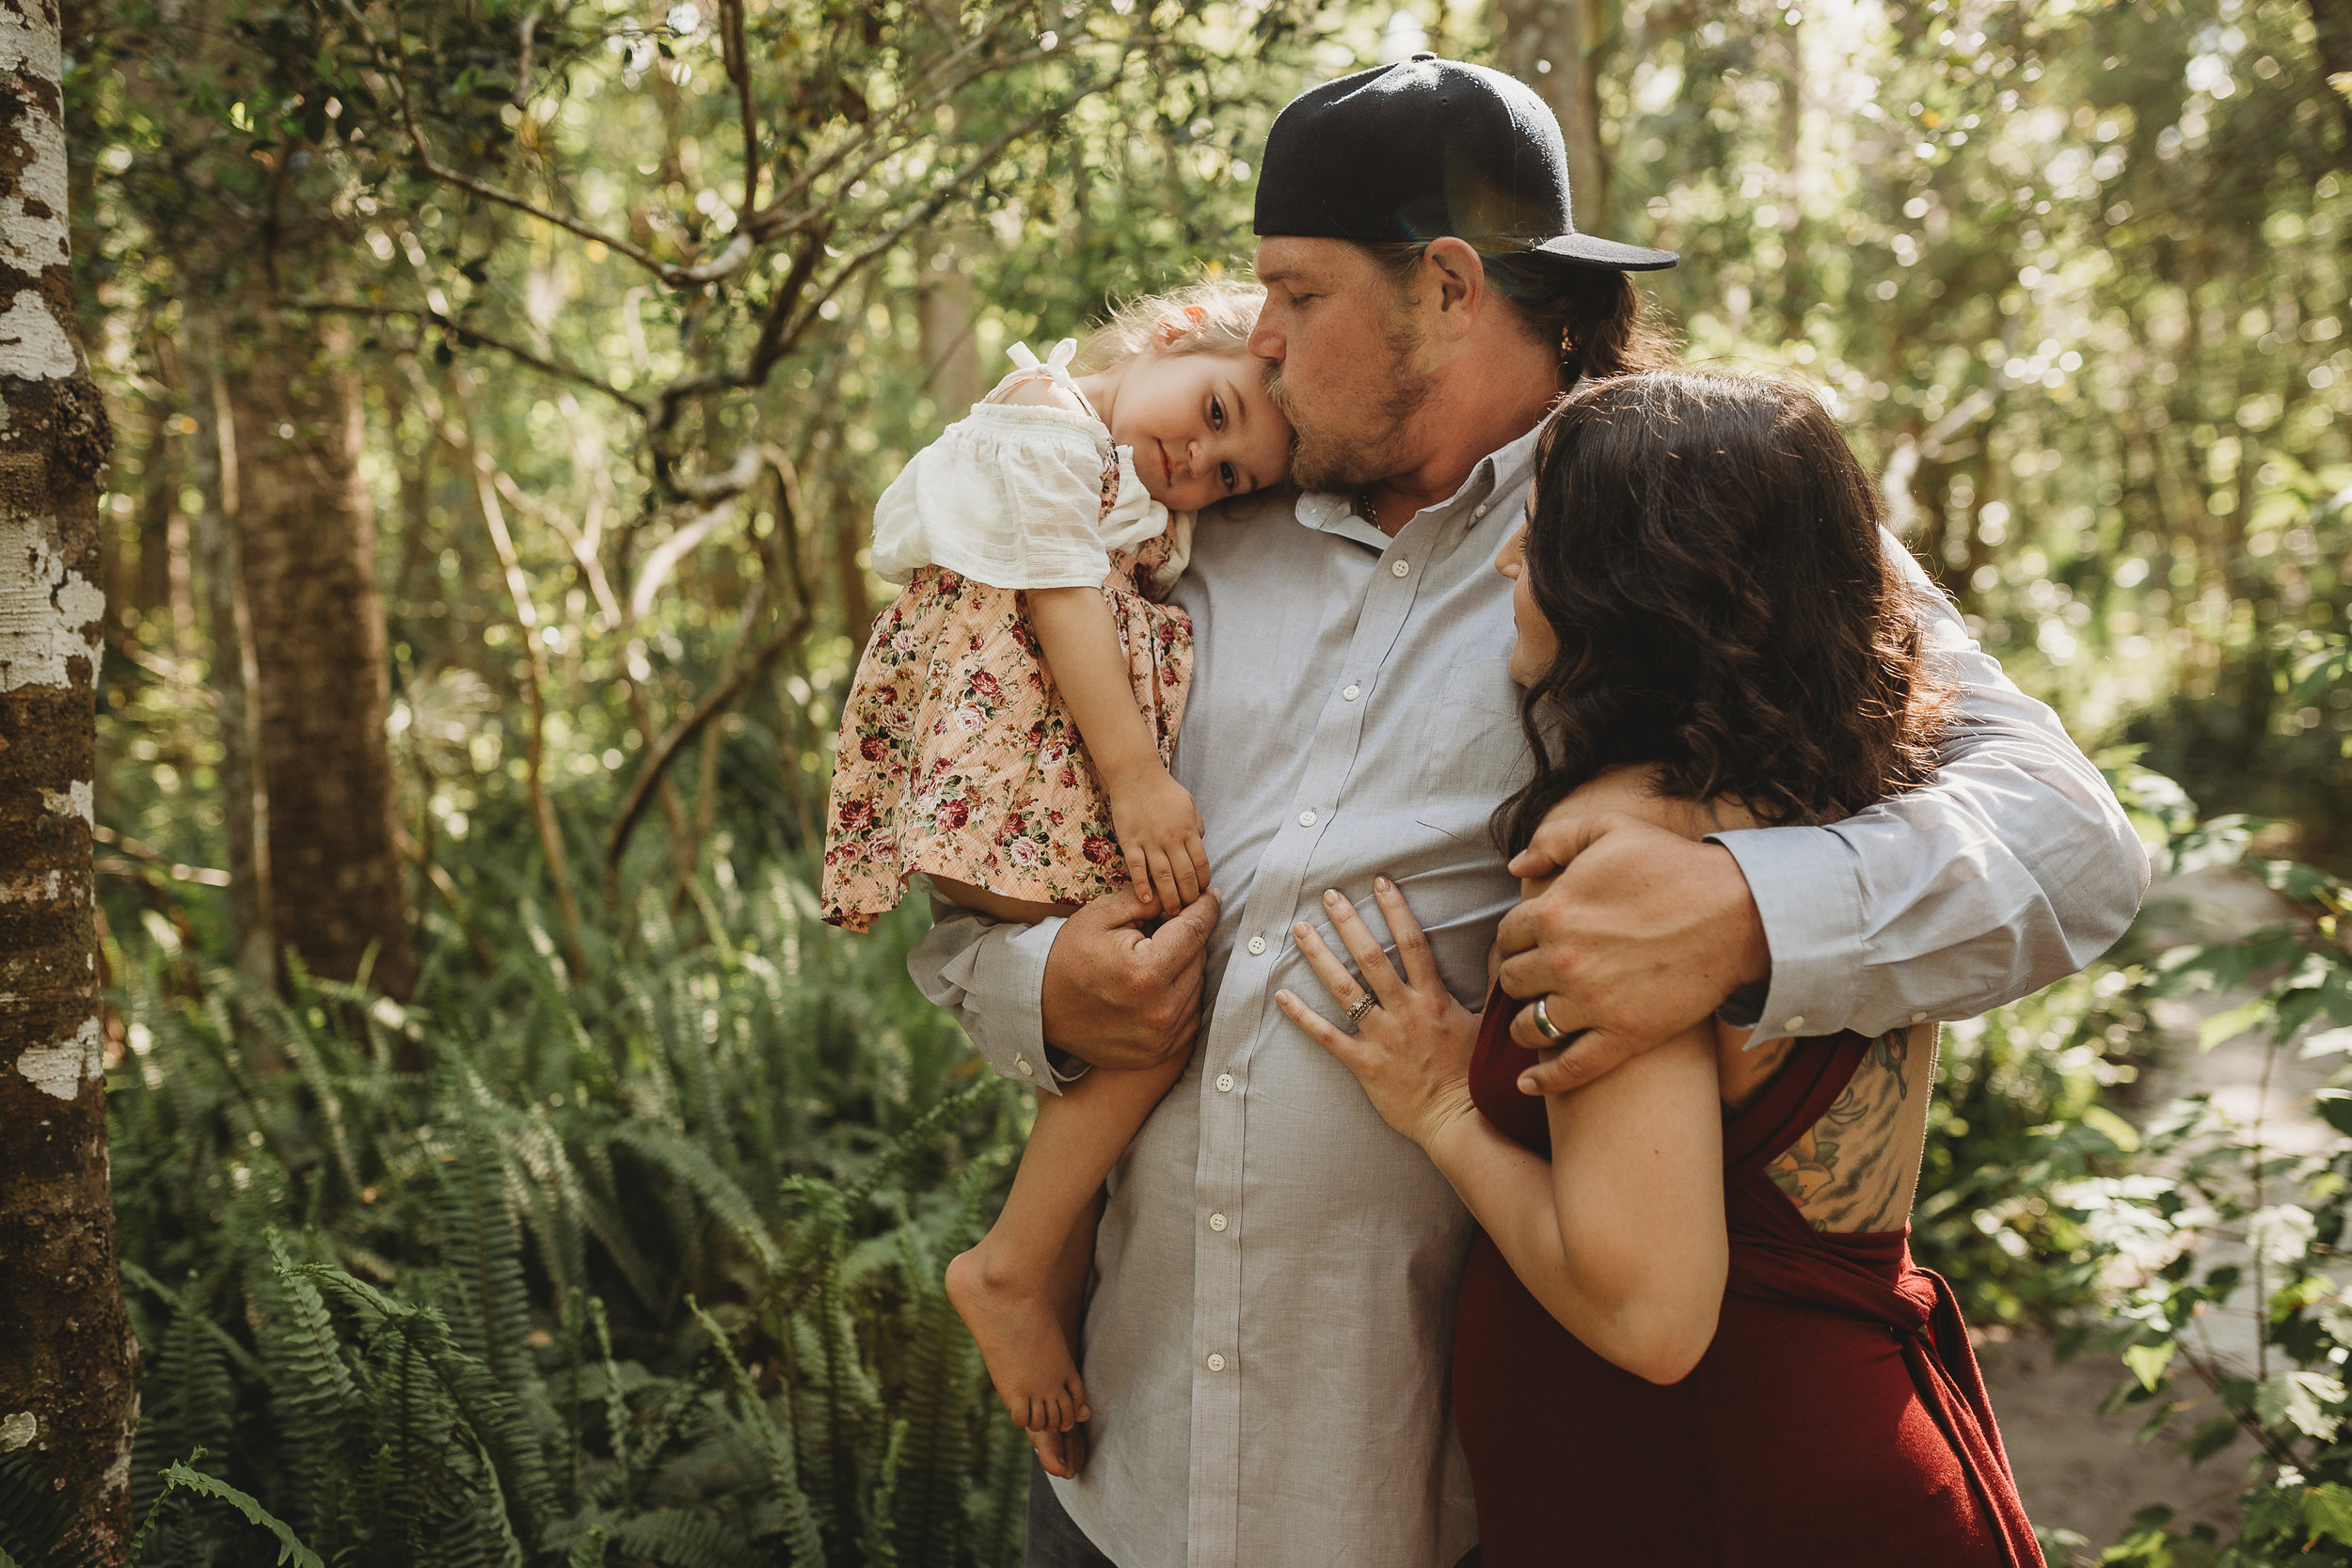 Daytona Beach Maternity photographer capturing emotive images at Sugar Mill Gardens in Port Orange